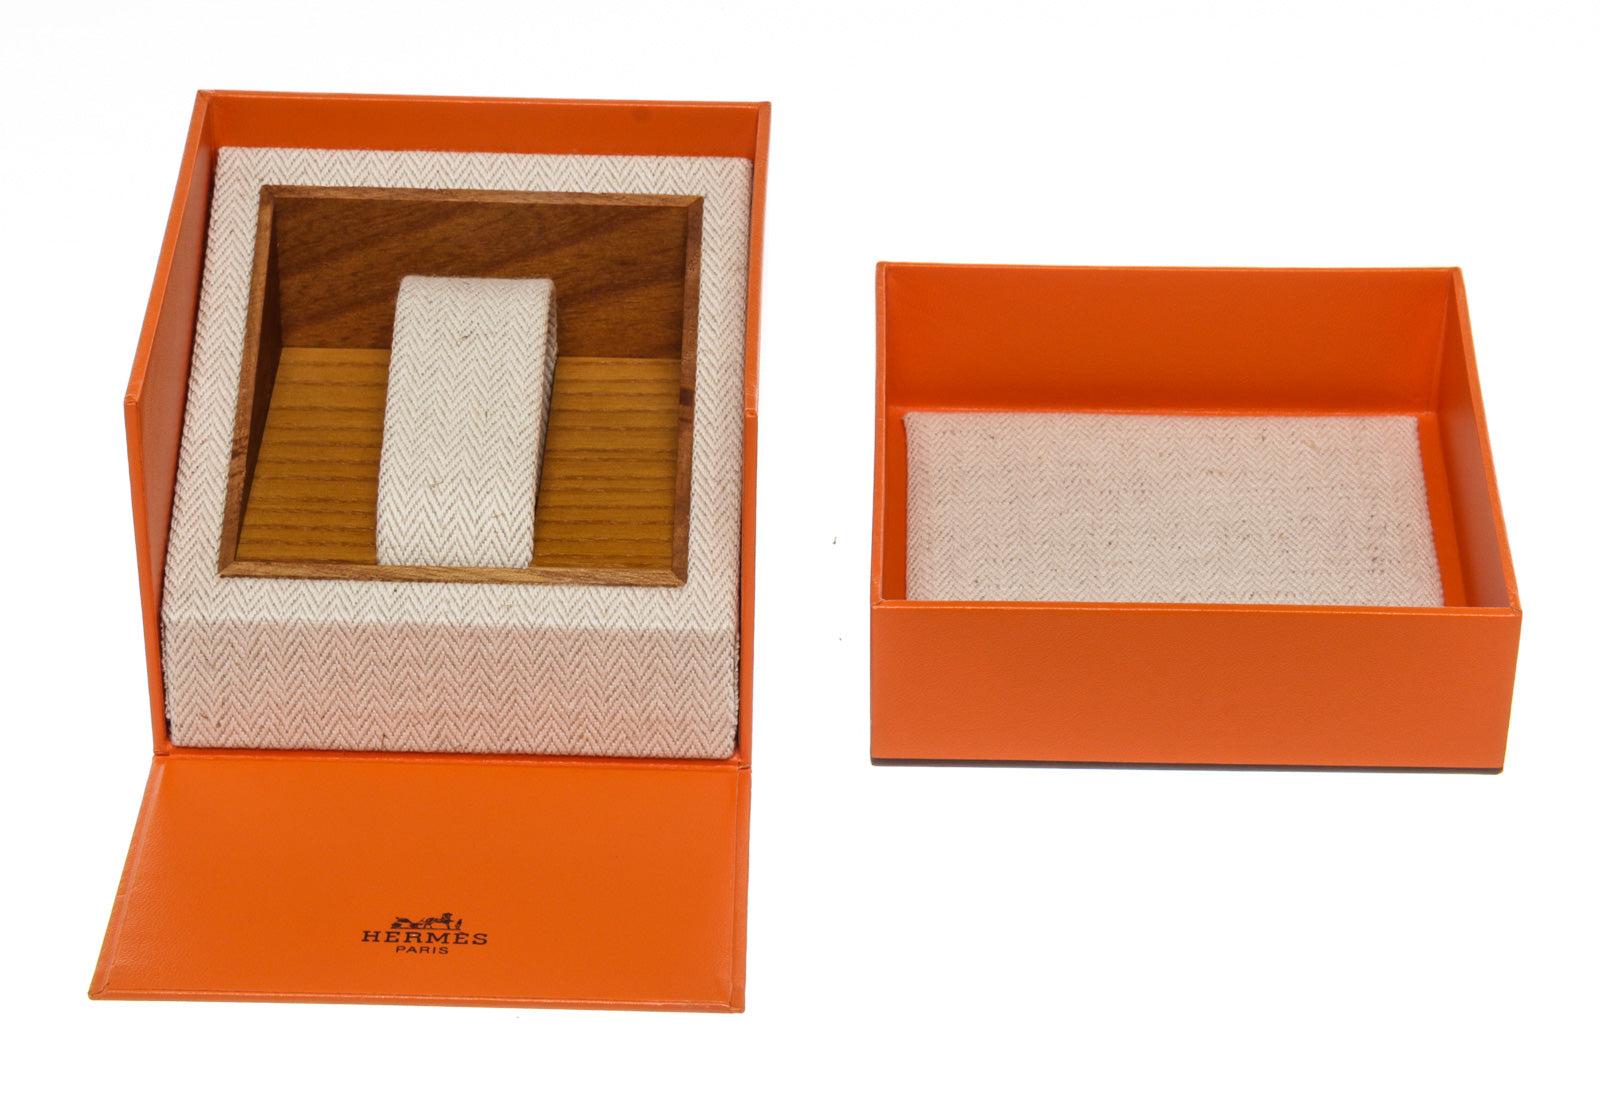 Hermes Orange Watch Box

53817MSC